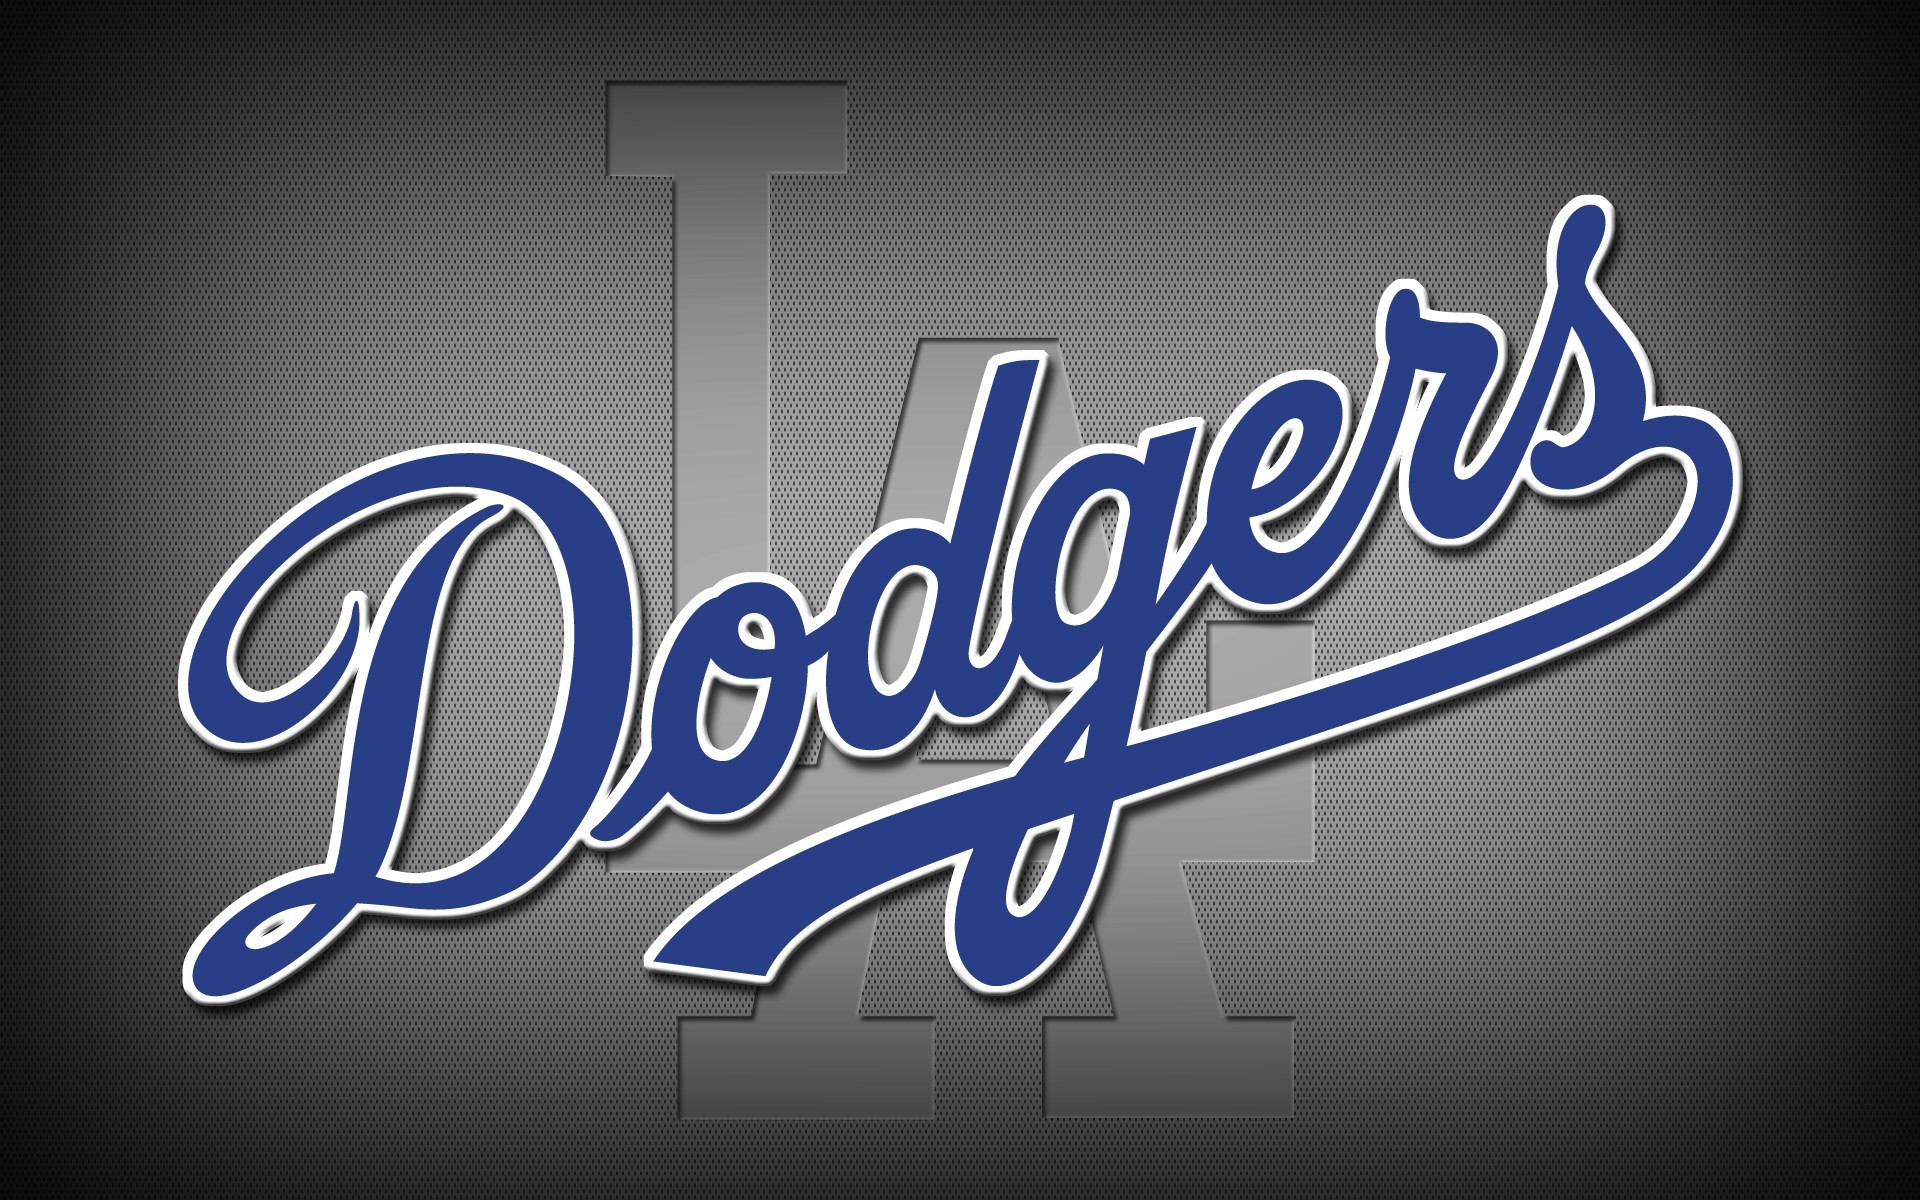 Los Angeles Dodgers Wallpaper IPhone.